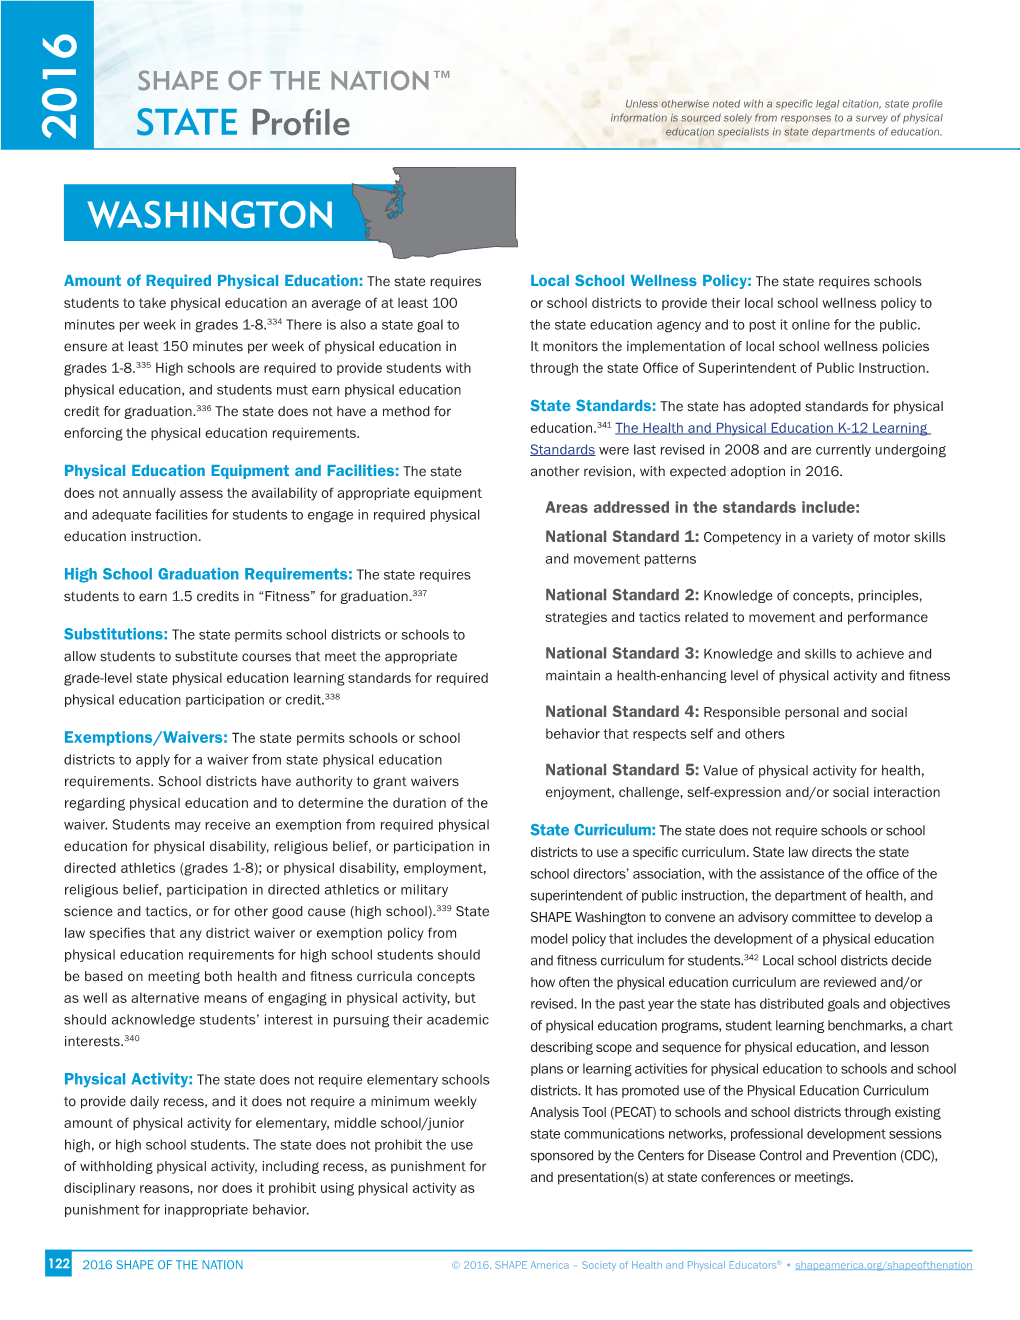 Washington State Profile